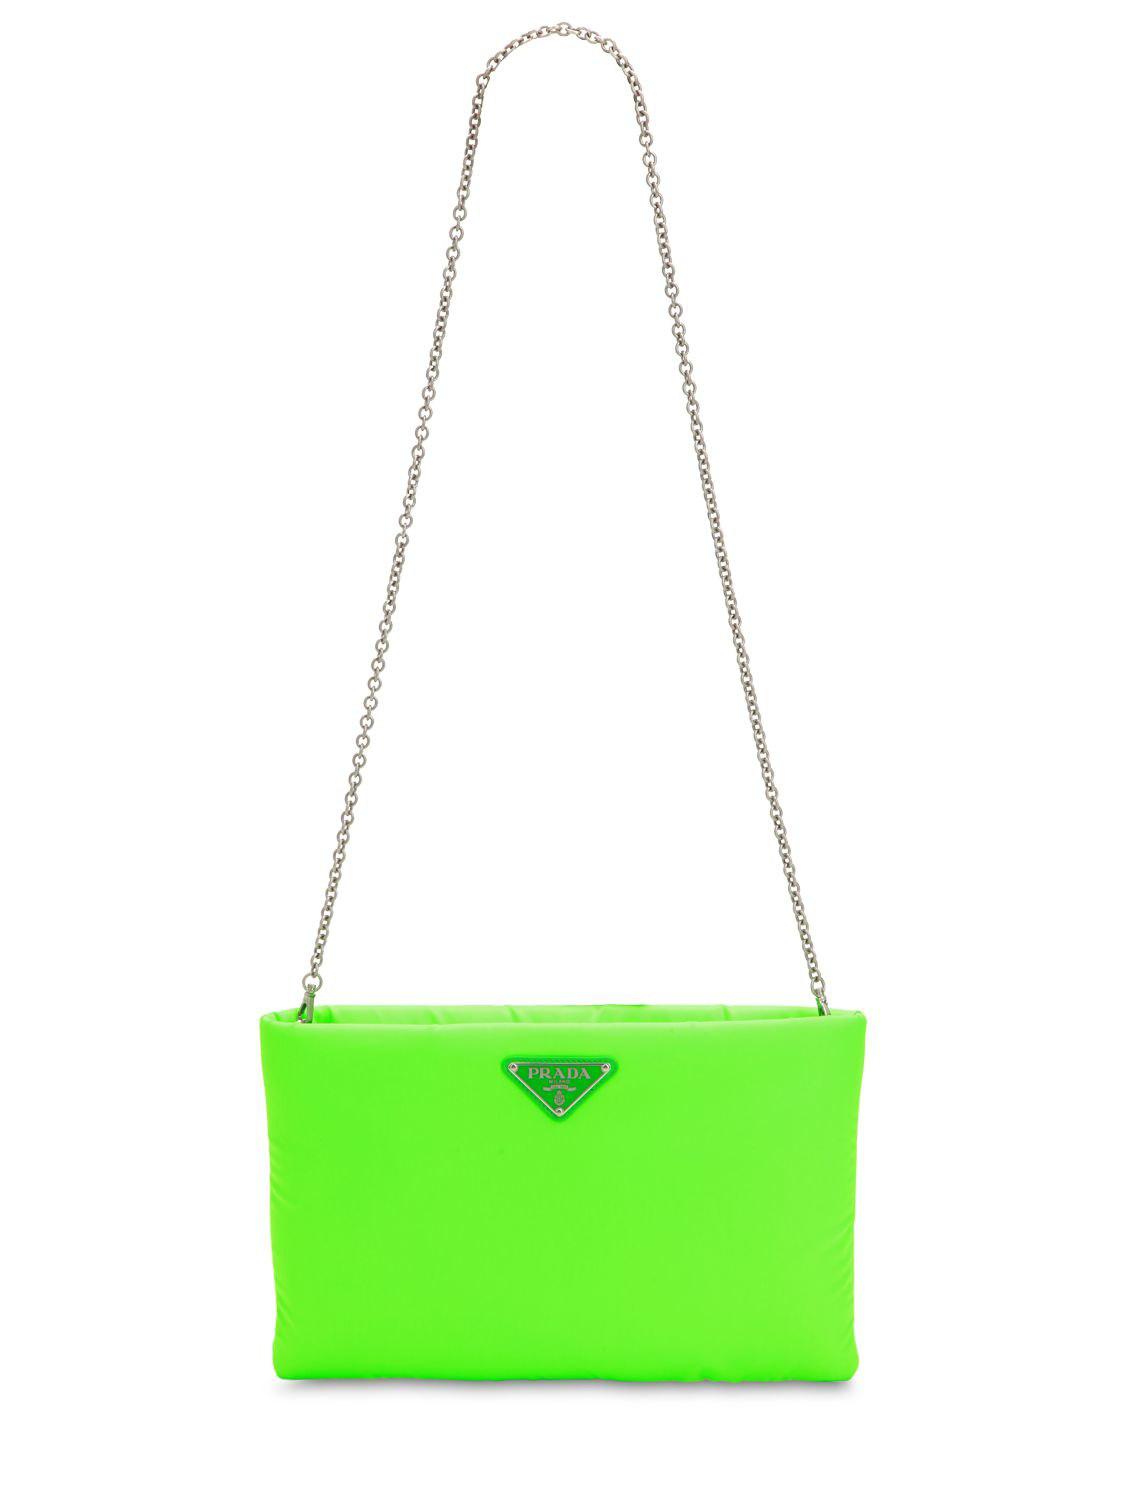 neon green prada bag, OFF 73%,Quality 